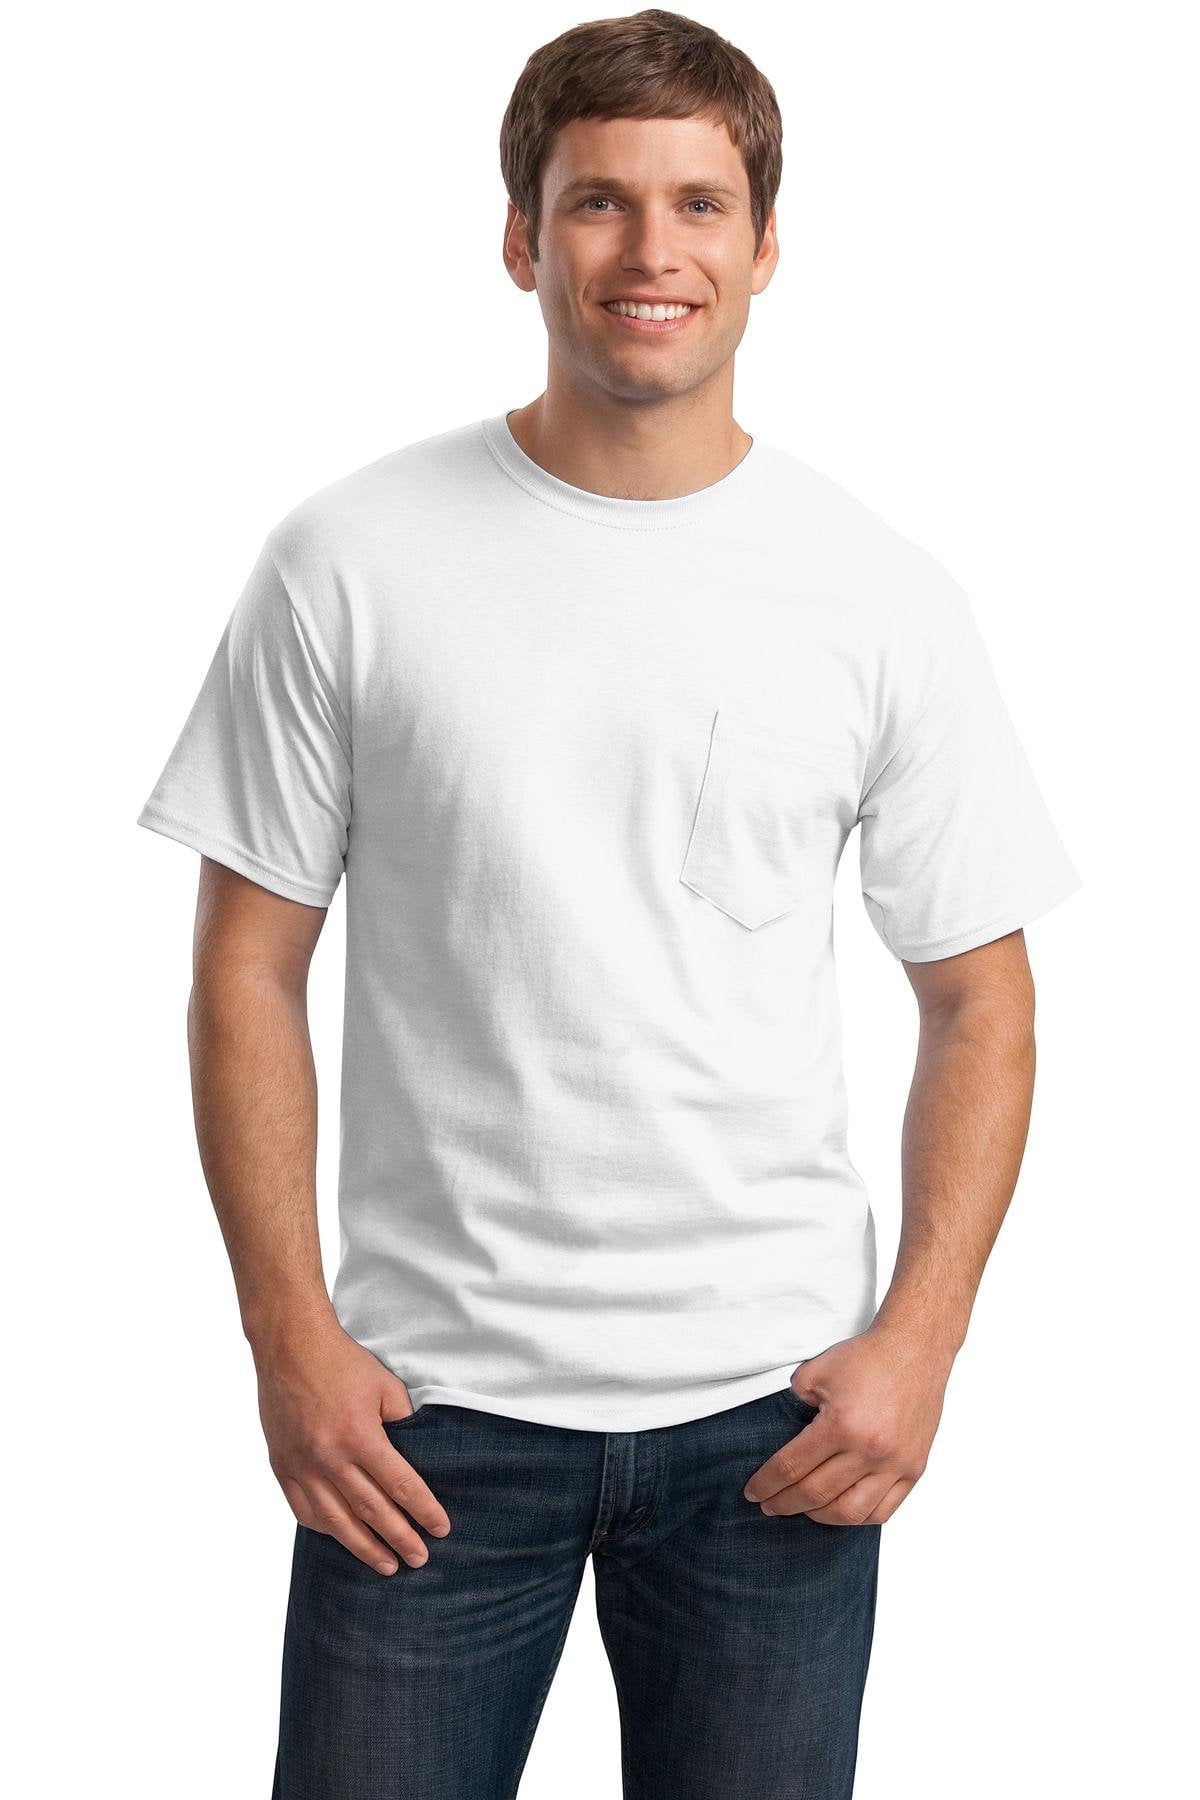 Hanes Men'S Tagless Comfortsoft Pocket T-Shirt - White - M-UMTSH5590 ...